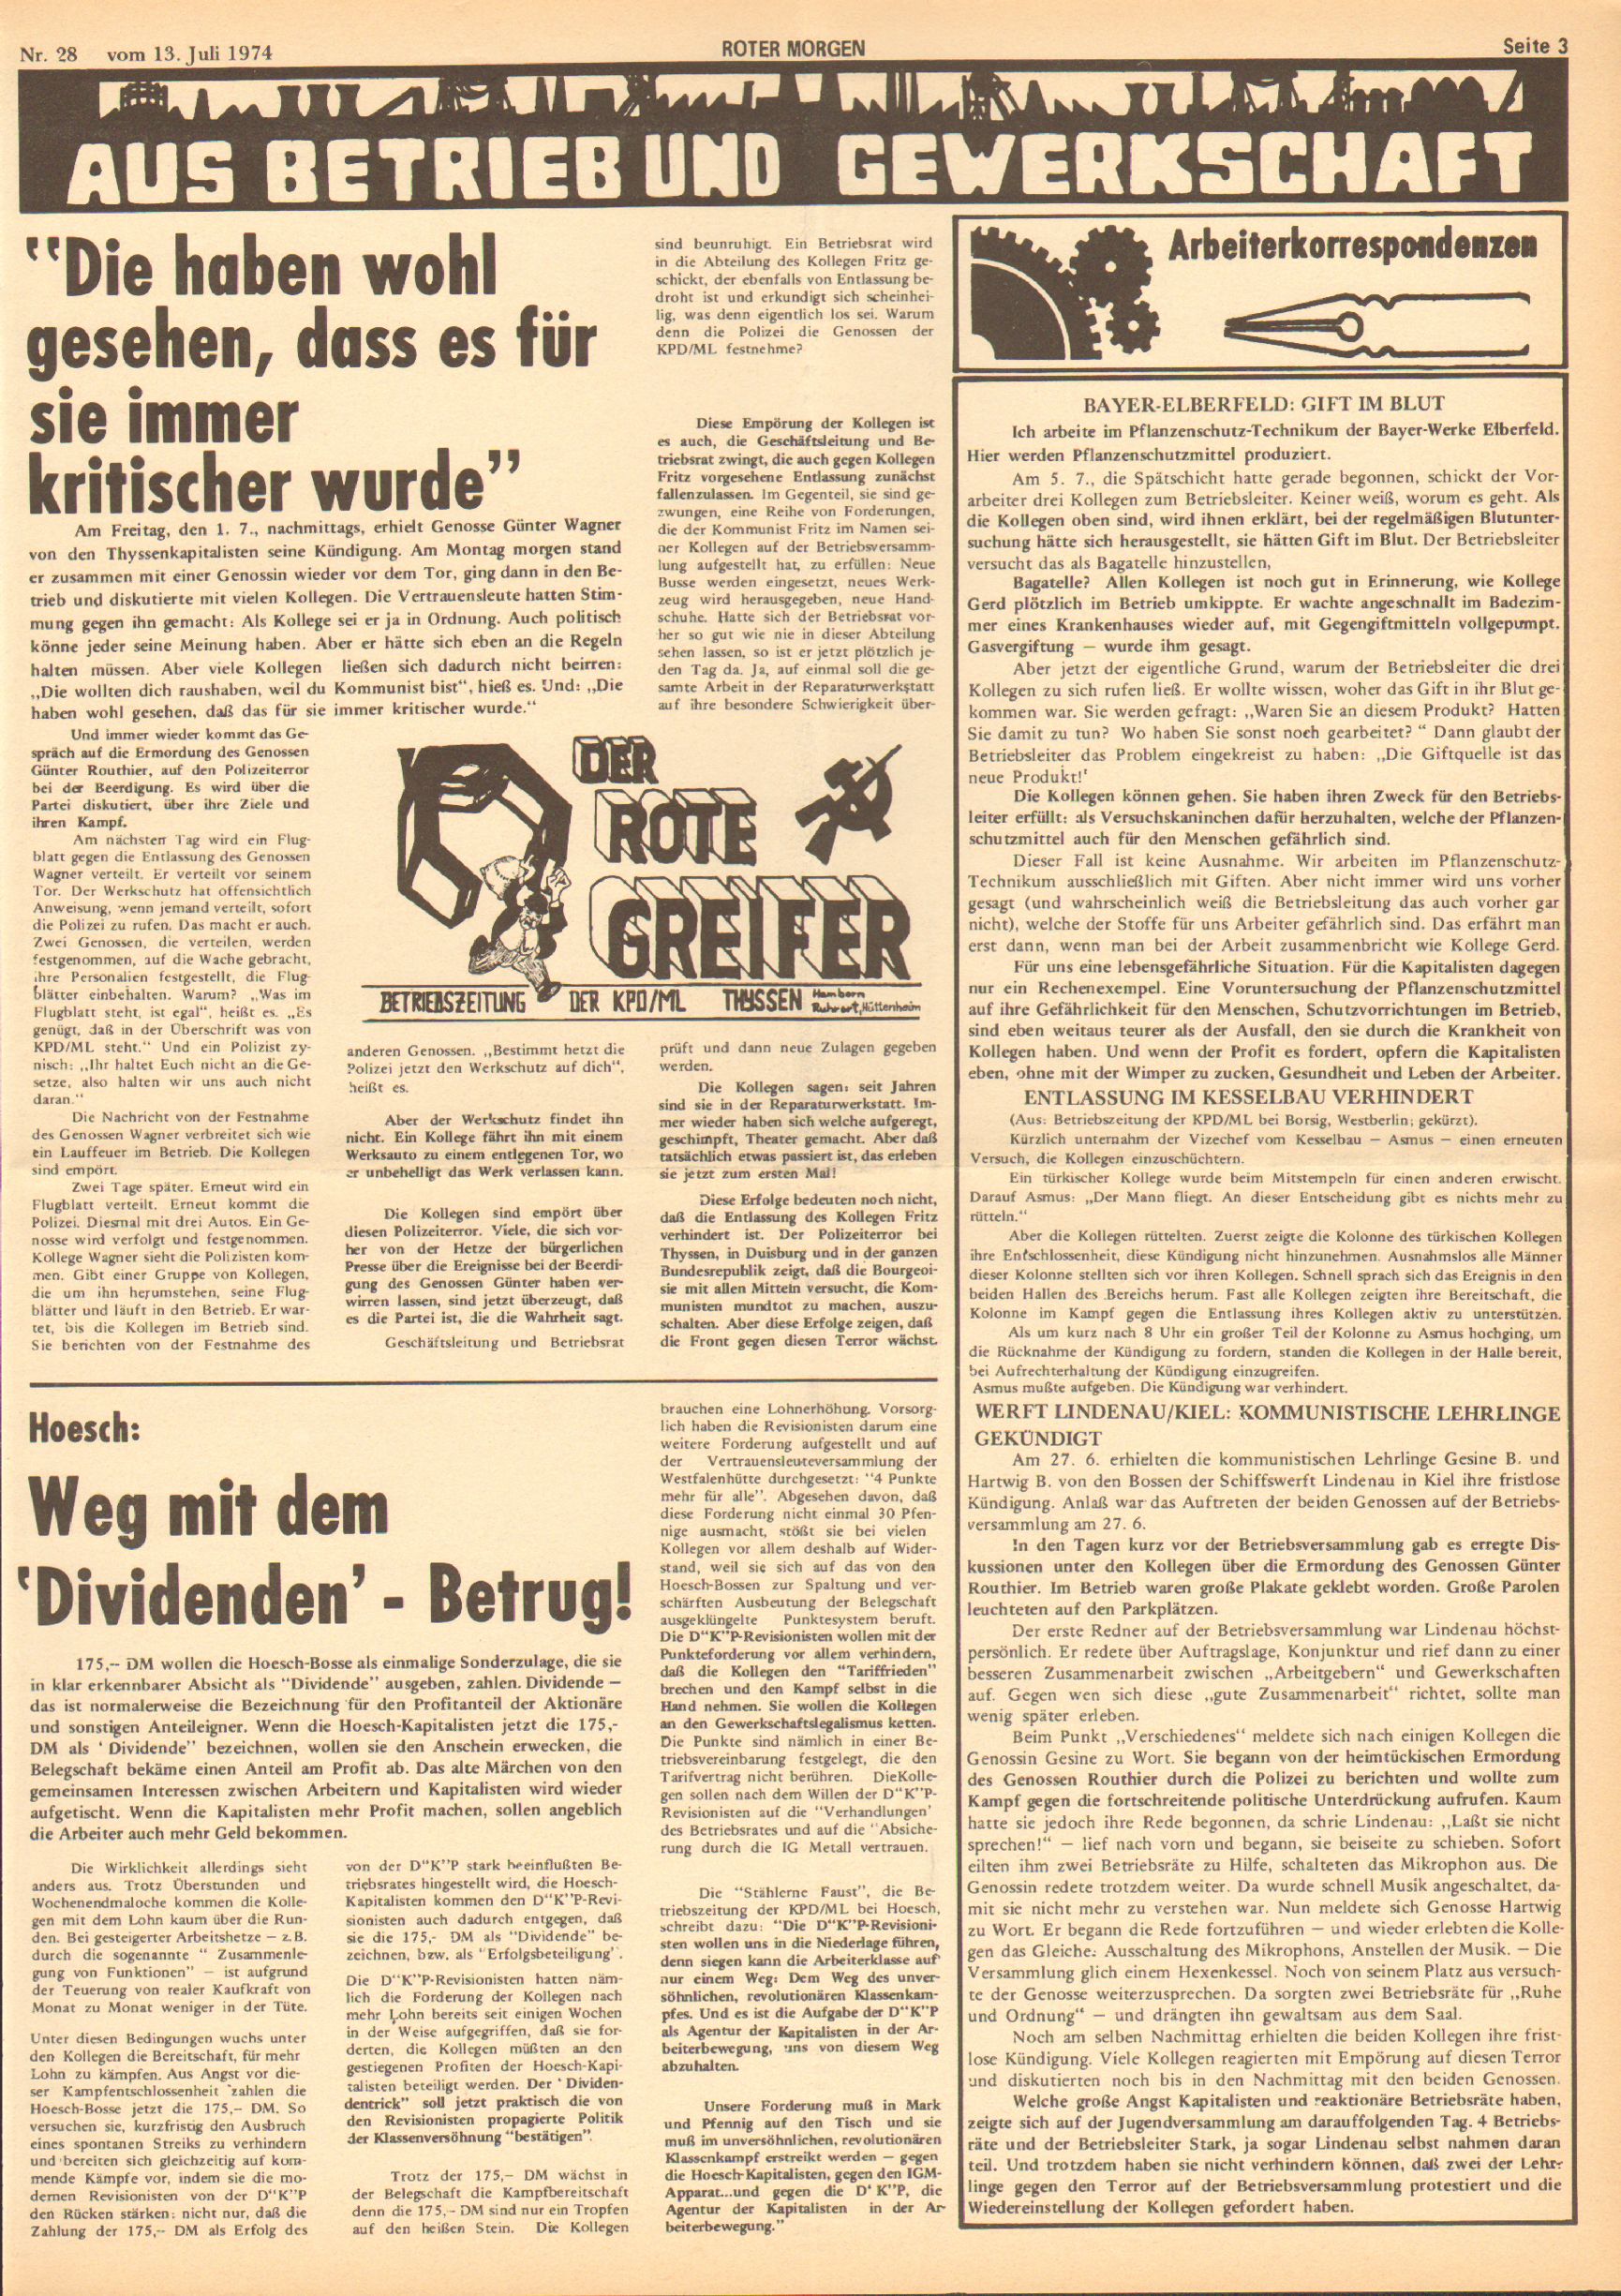 Roter Morgen, 8. Jg., 13. Juli 1974, Nr. 28, Seite 3